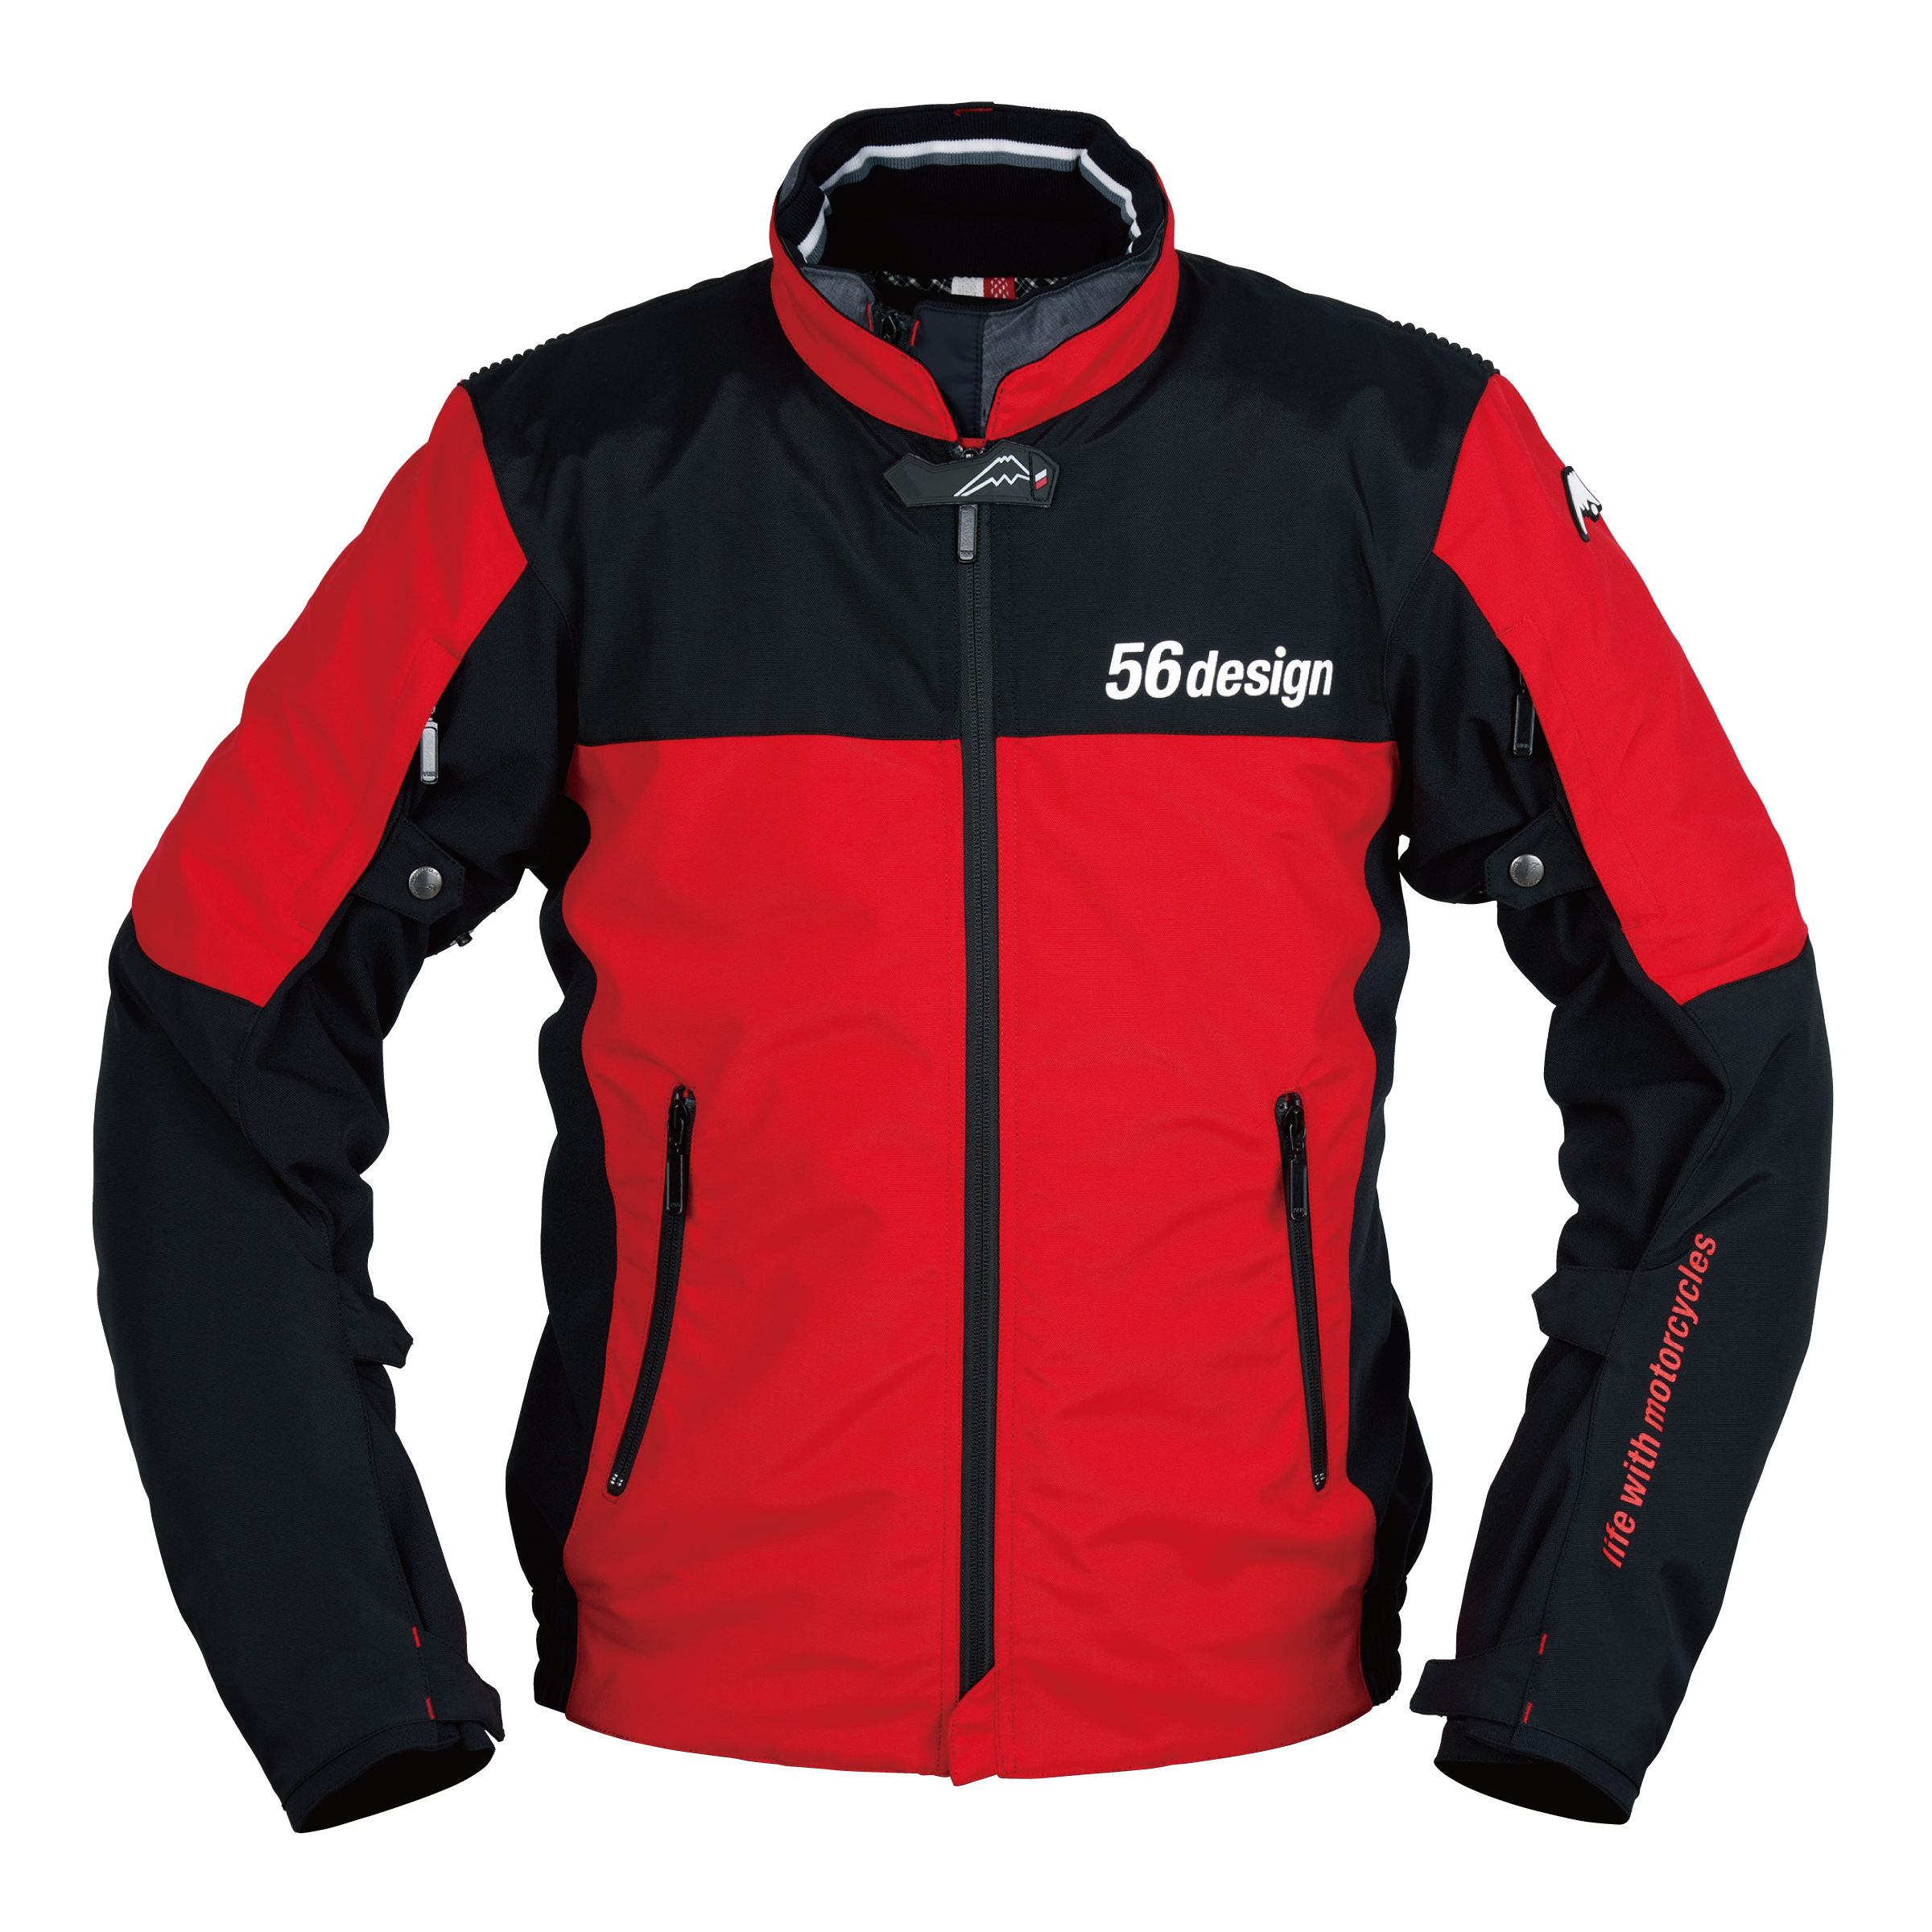 56design GP jacketⅢ black/red Lサイズ 美品-